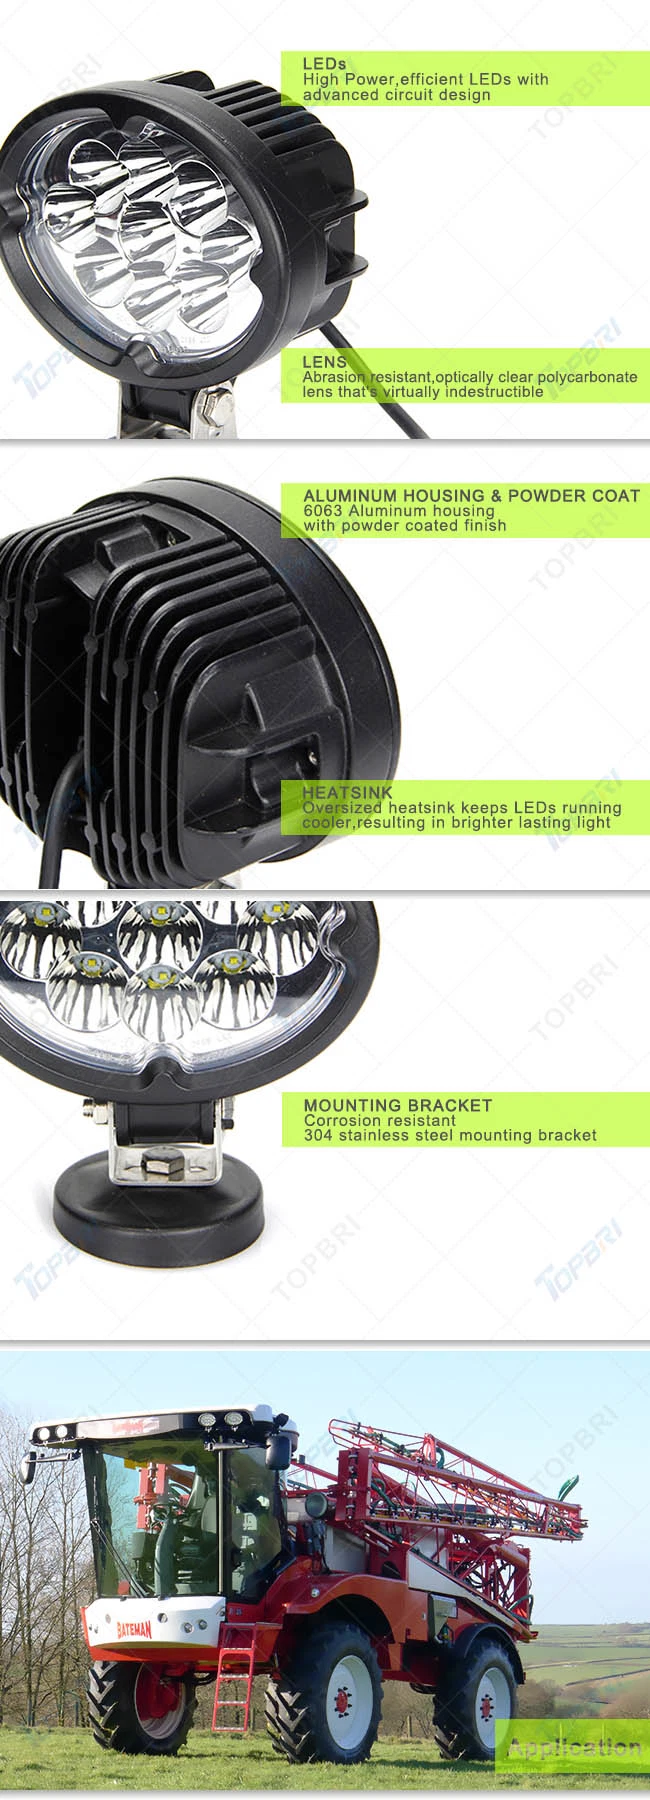 E-MARK Approved EMC 12V 27W Oval LED Agricultural Headlight